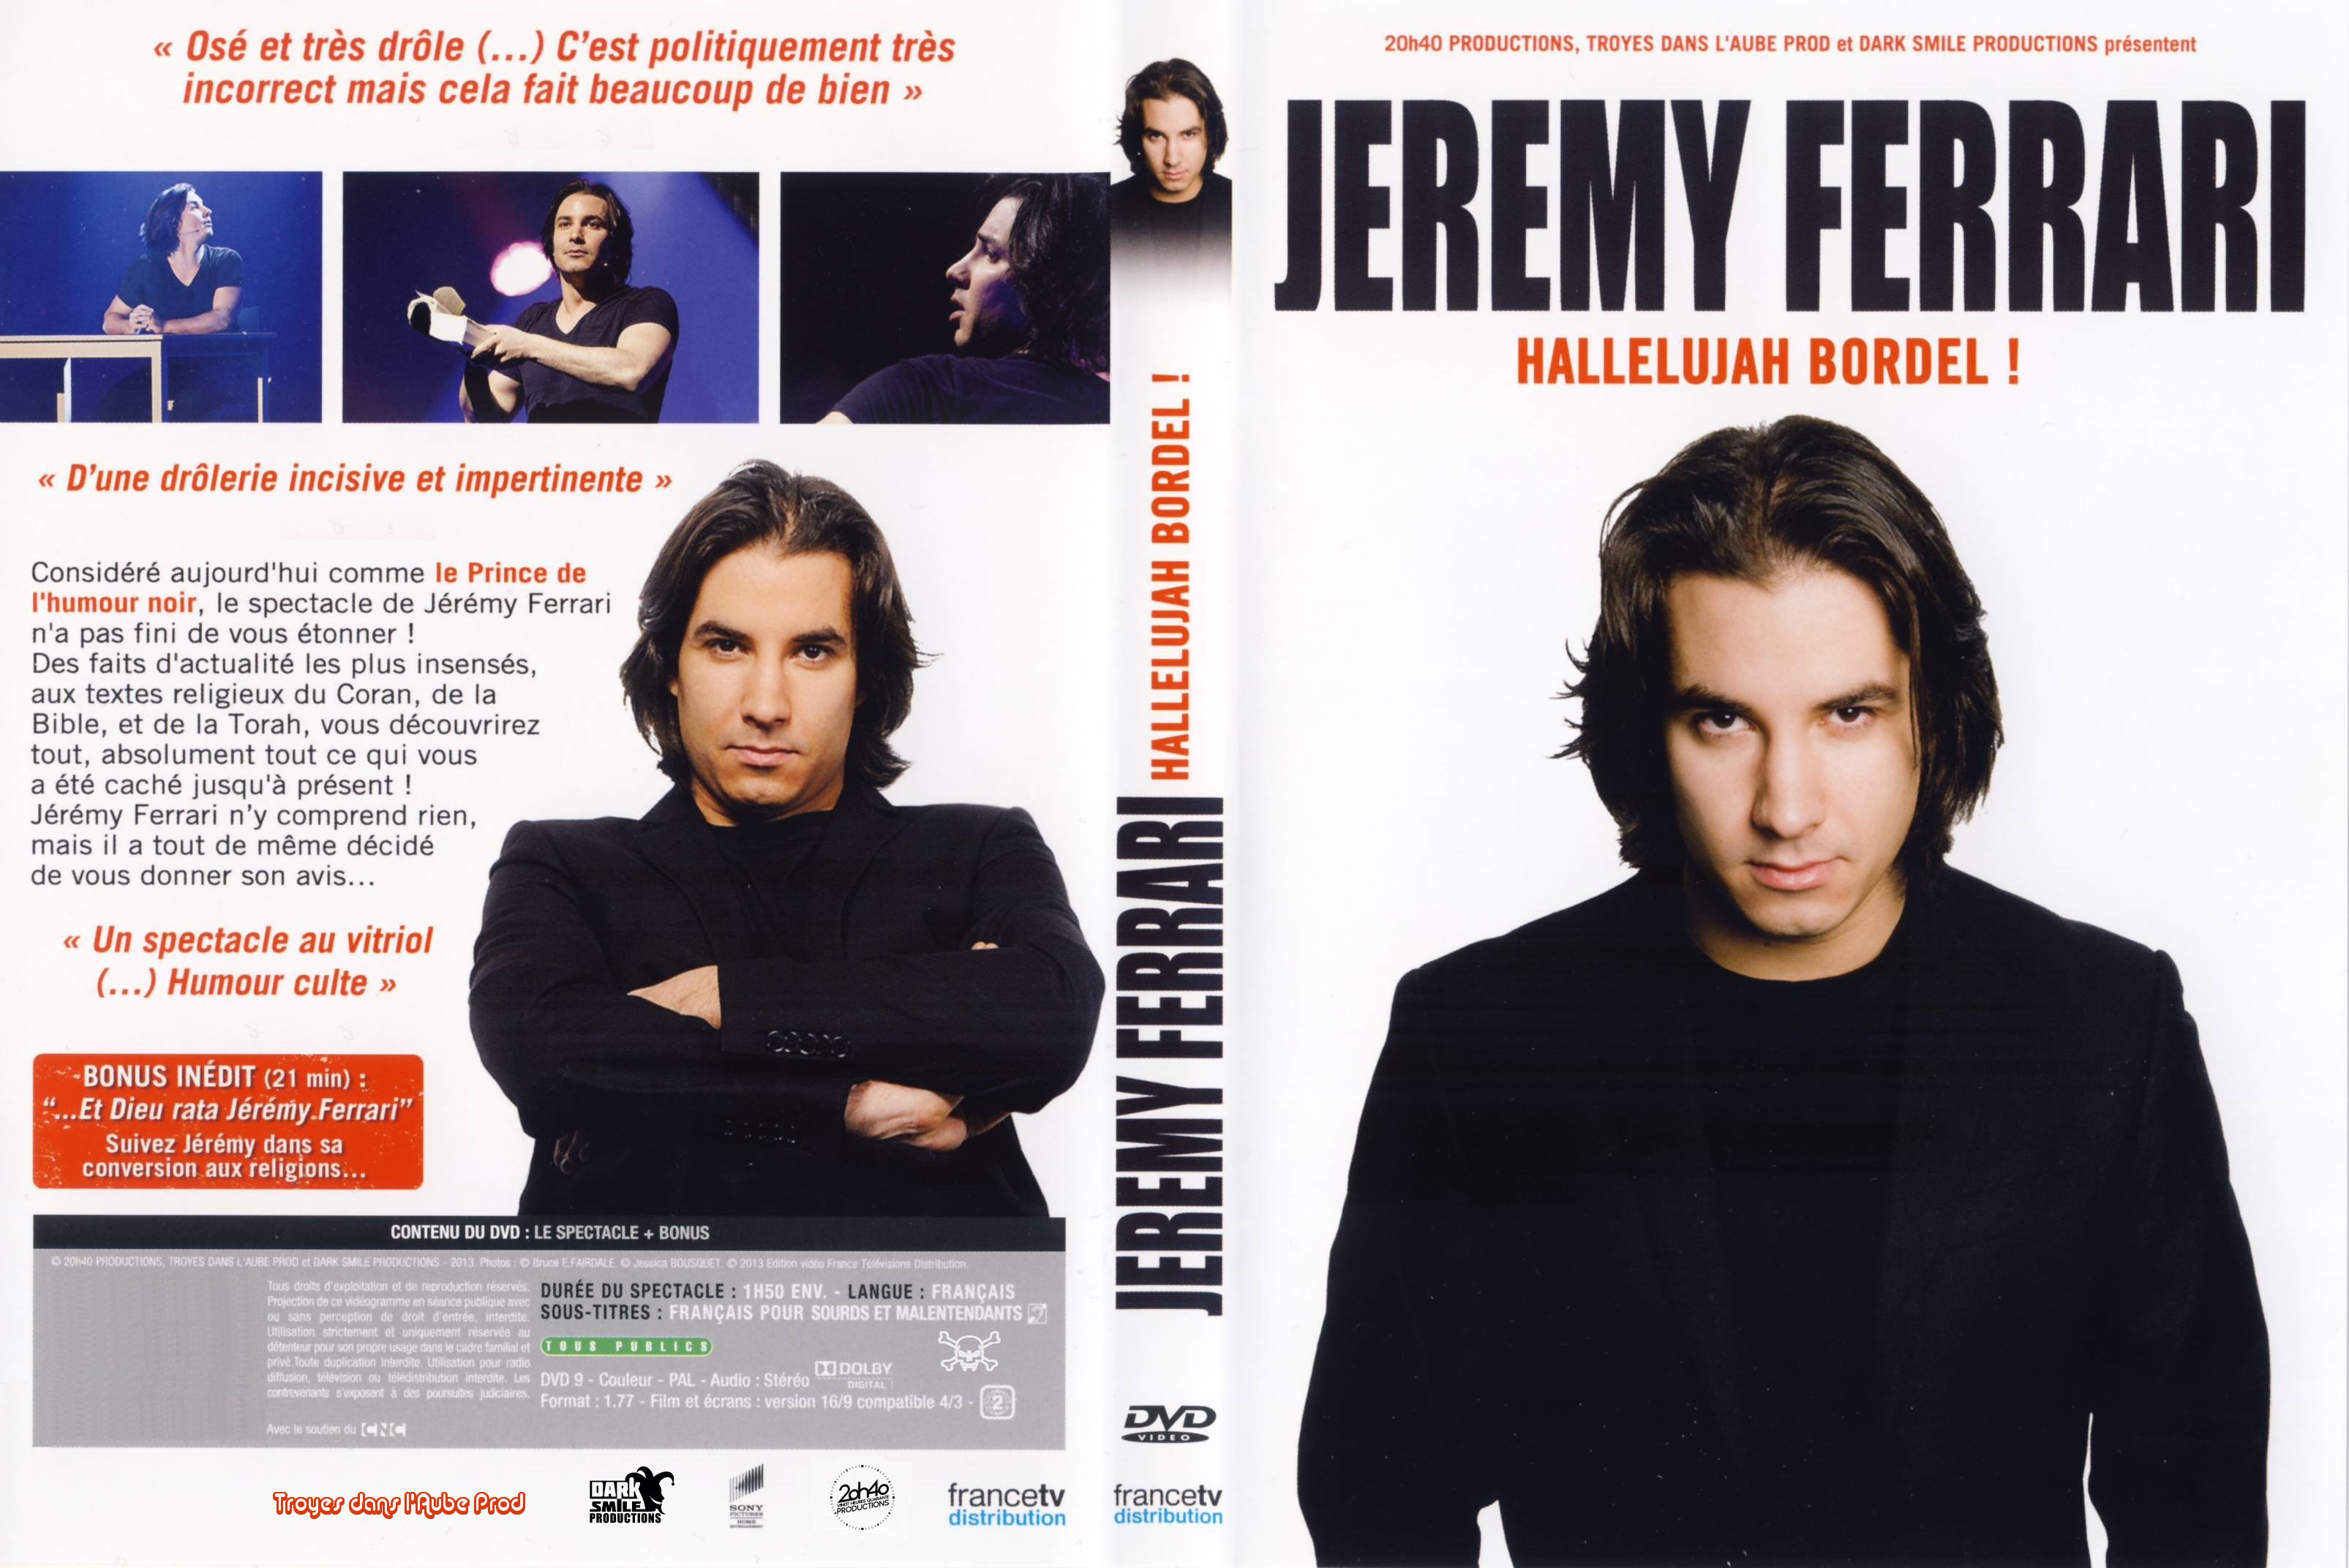 Jaquette DVD Jeremy Ferrari Hallelujah Bordel custom